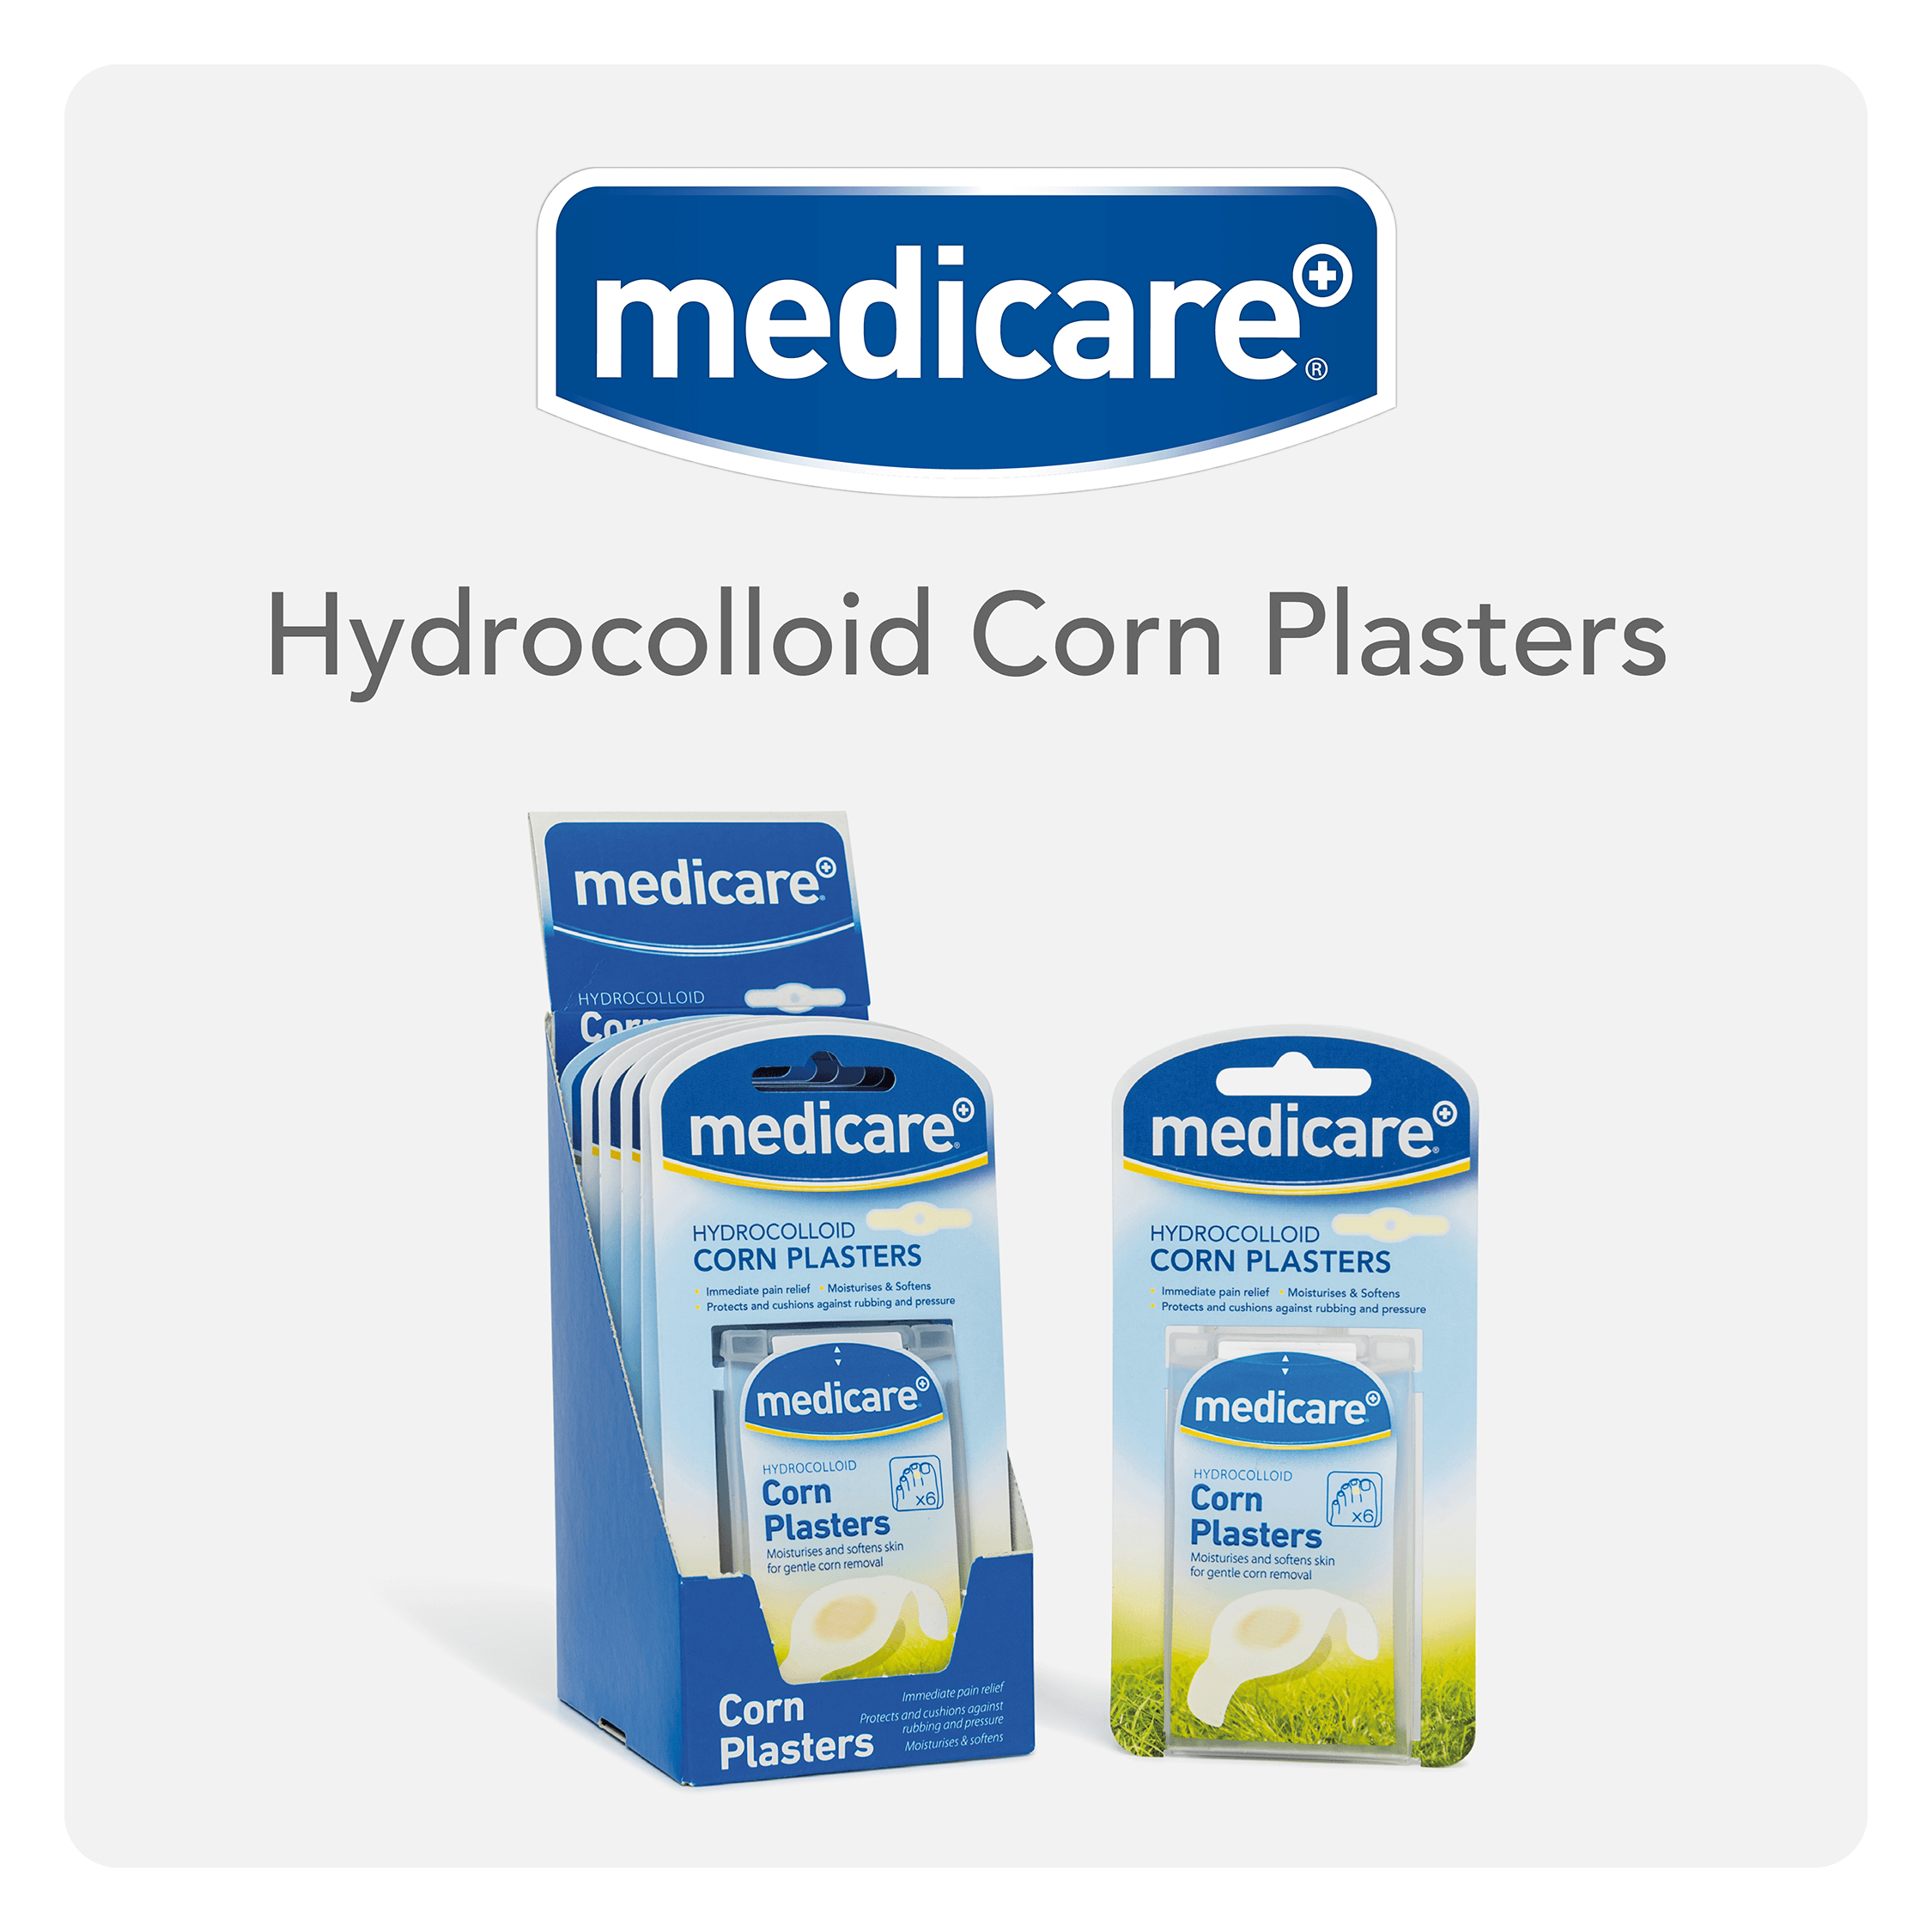 Hydrocolloid Corn Plasters